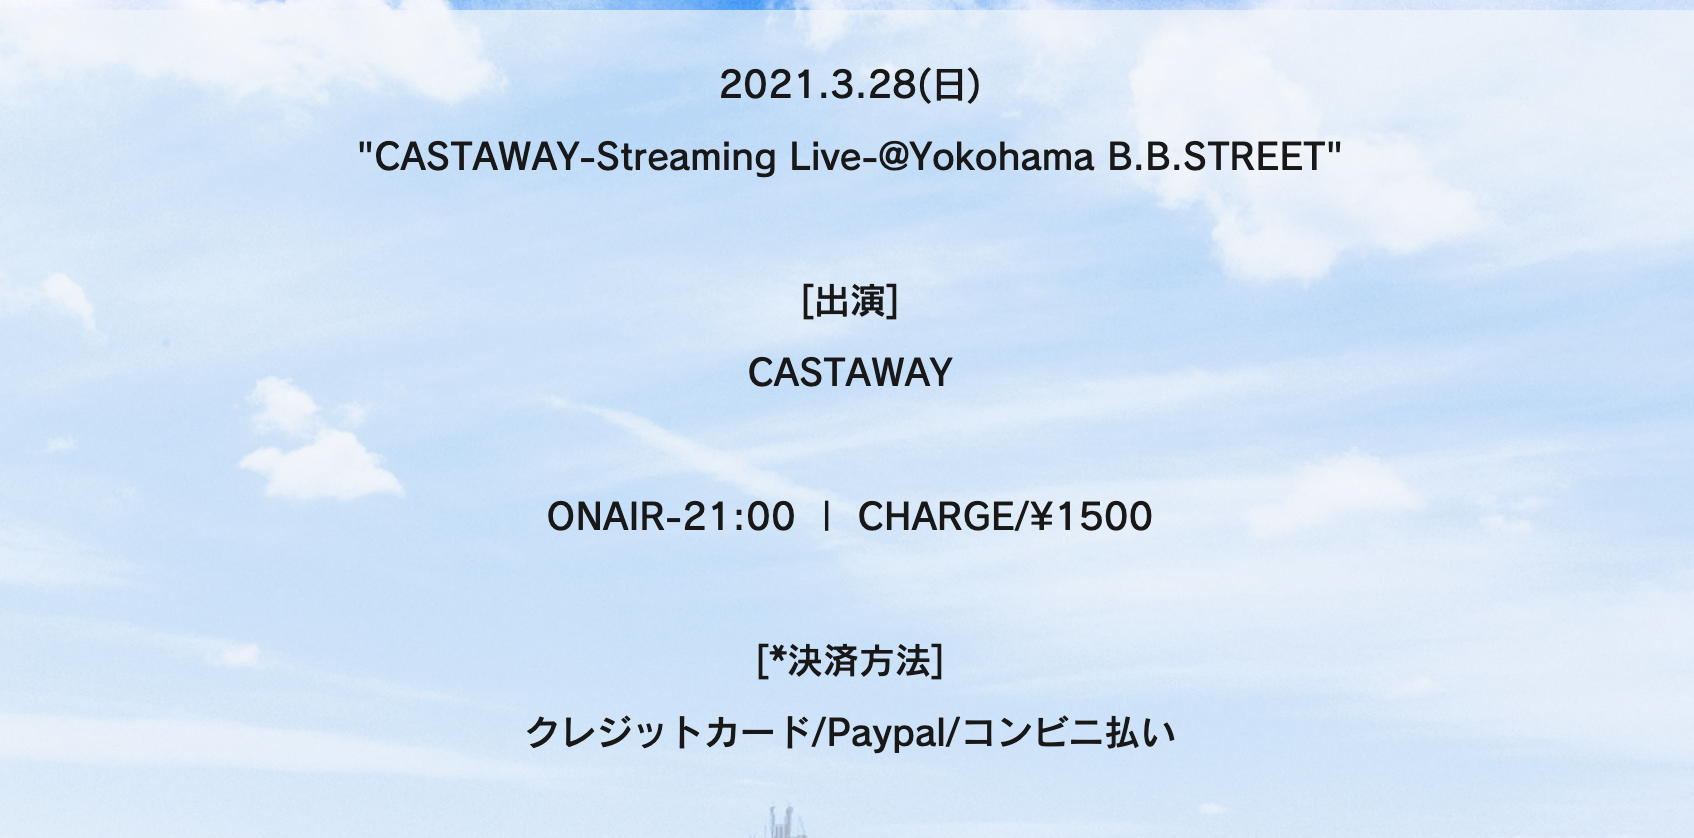 CASTAWAY-Streaming Live-@Yokohama B.B.STREET